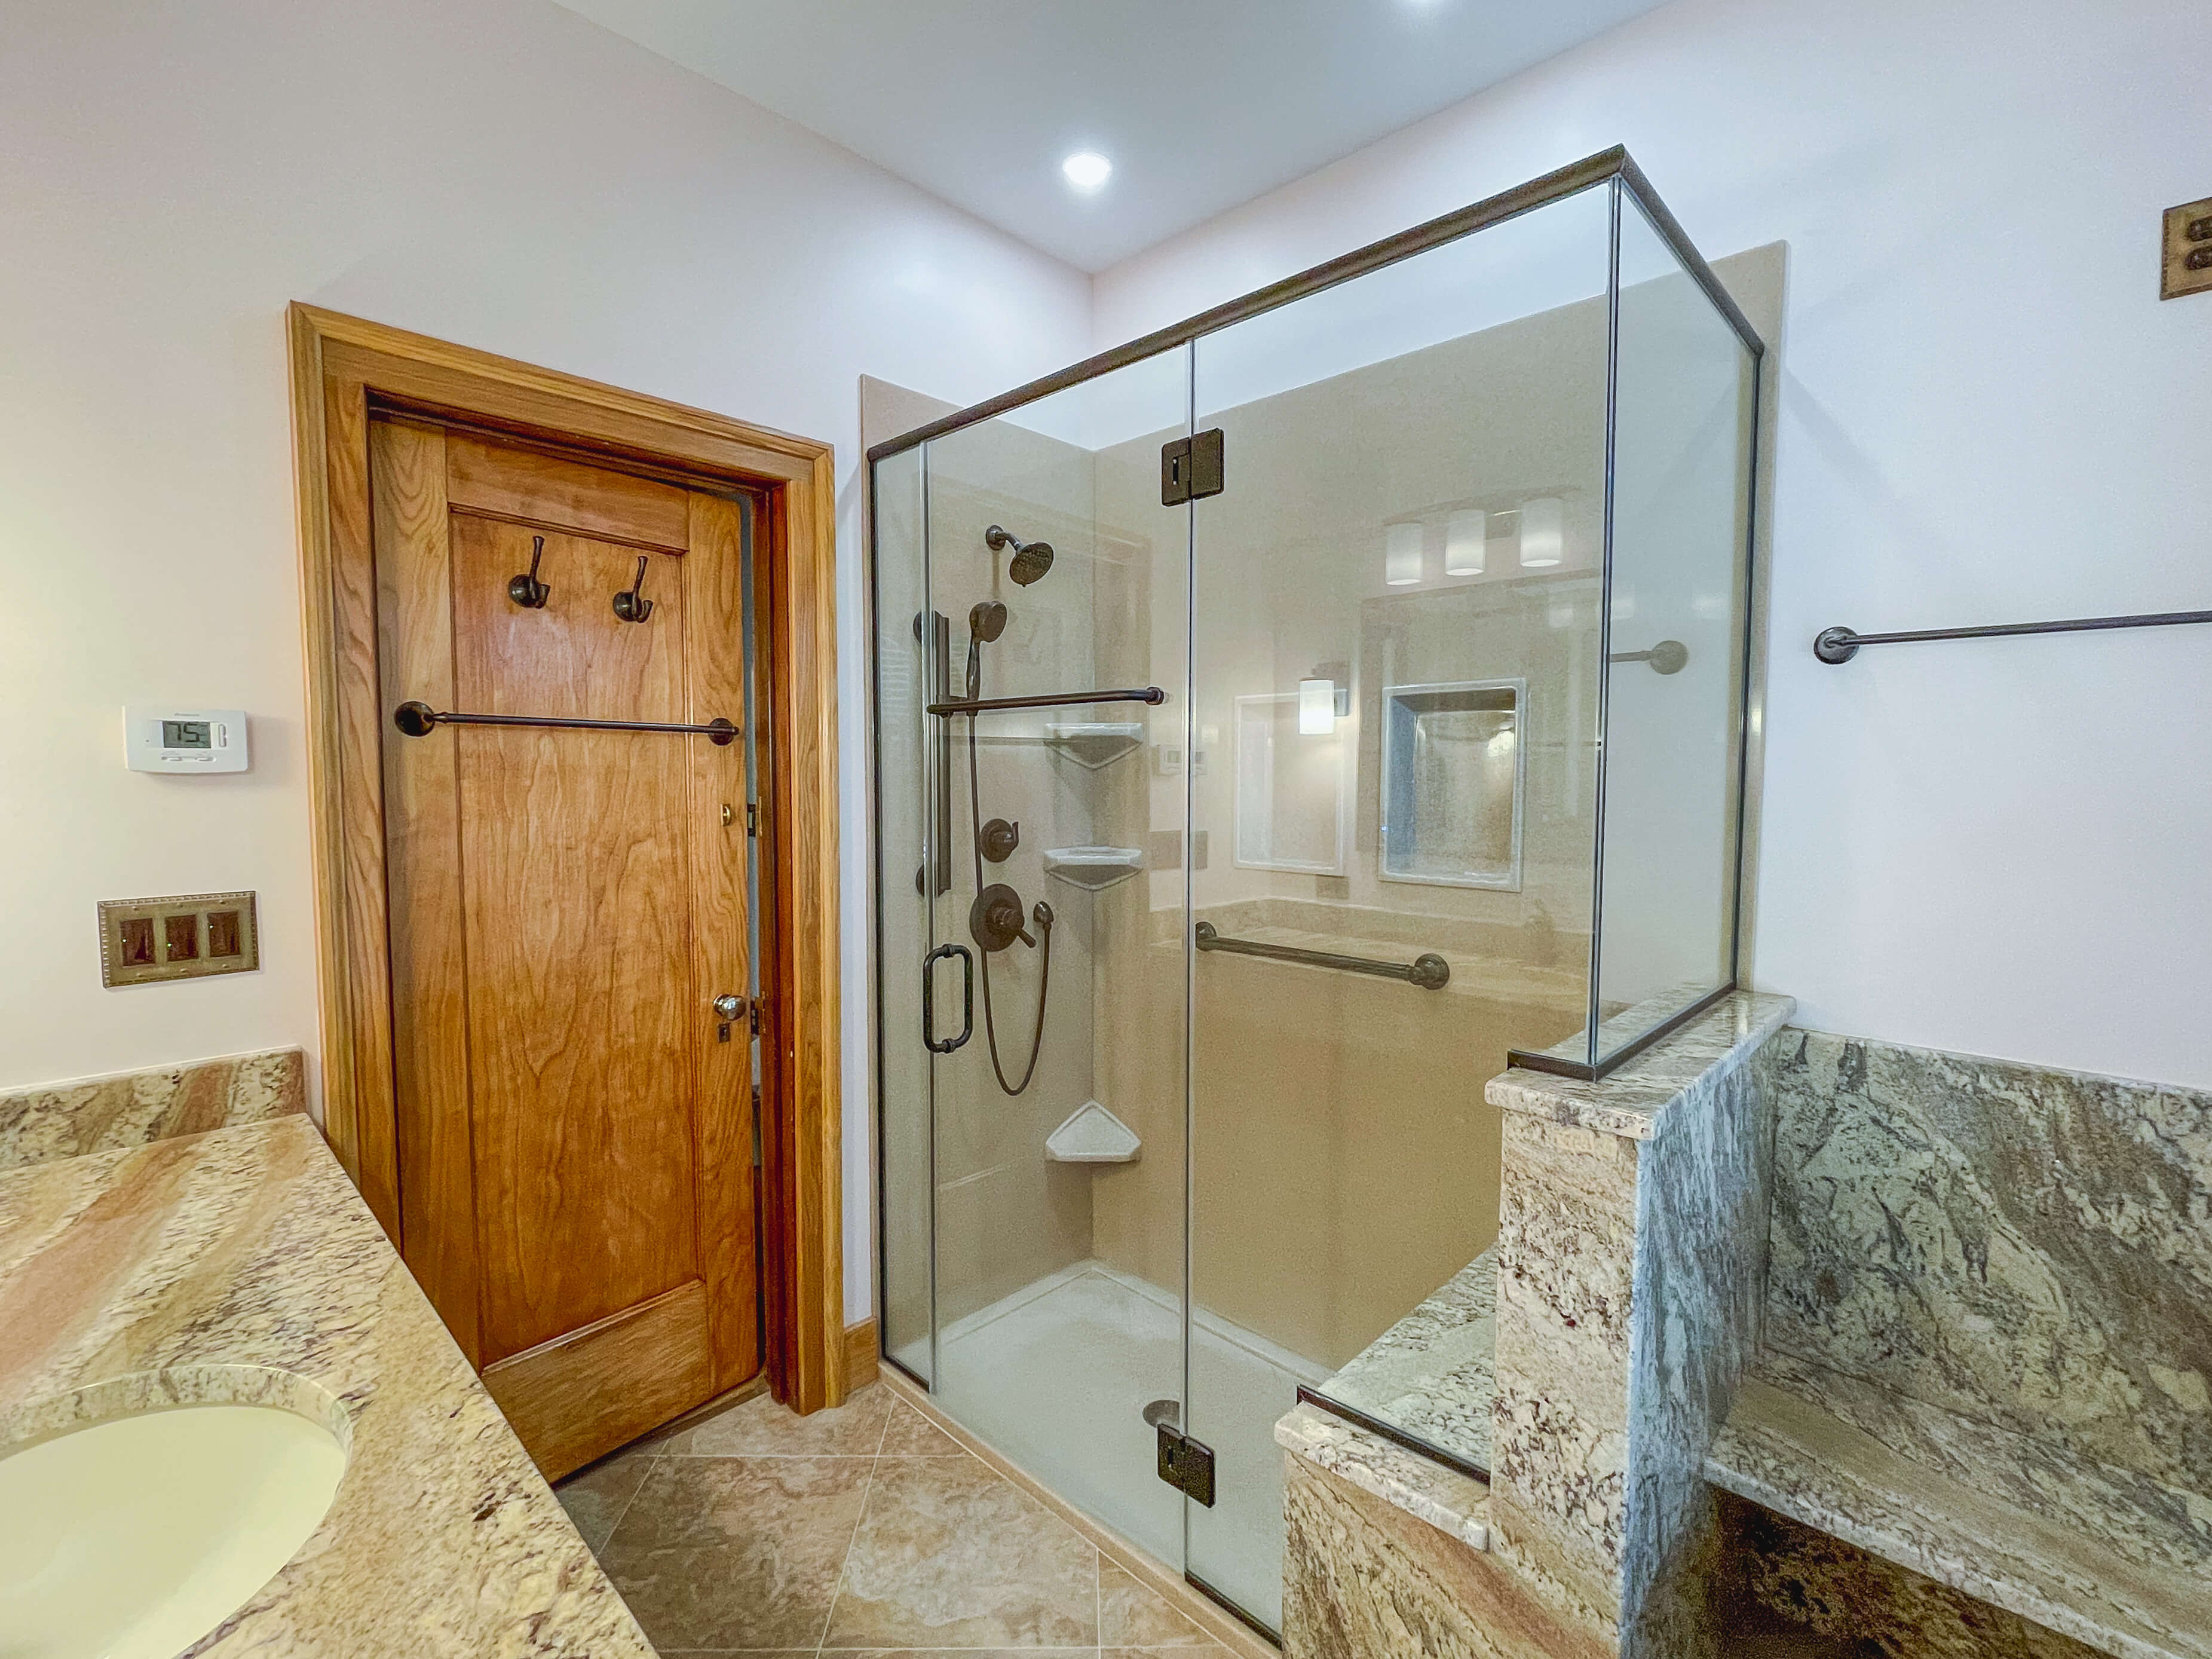 https://www.mcclurgteam.com/hs-fs/hubfs/walk-in-shower-bathroom-remodel-2.jpg?width=3702&height=2776&name=walk-in-shower-bathroom-remodel-2.jpg